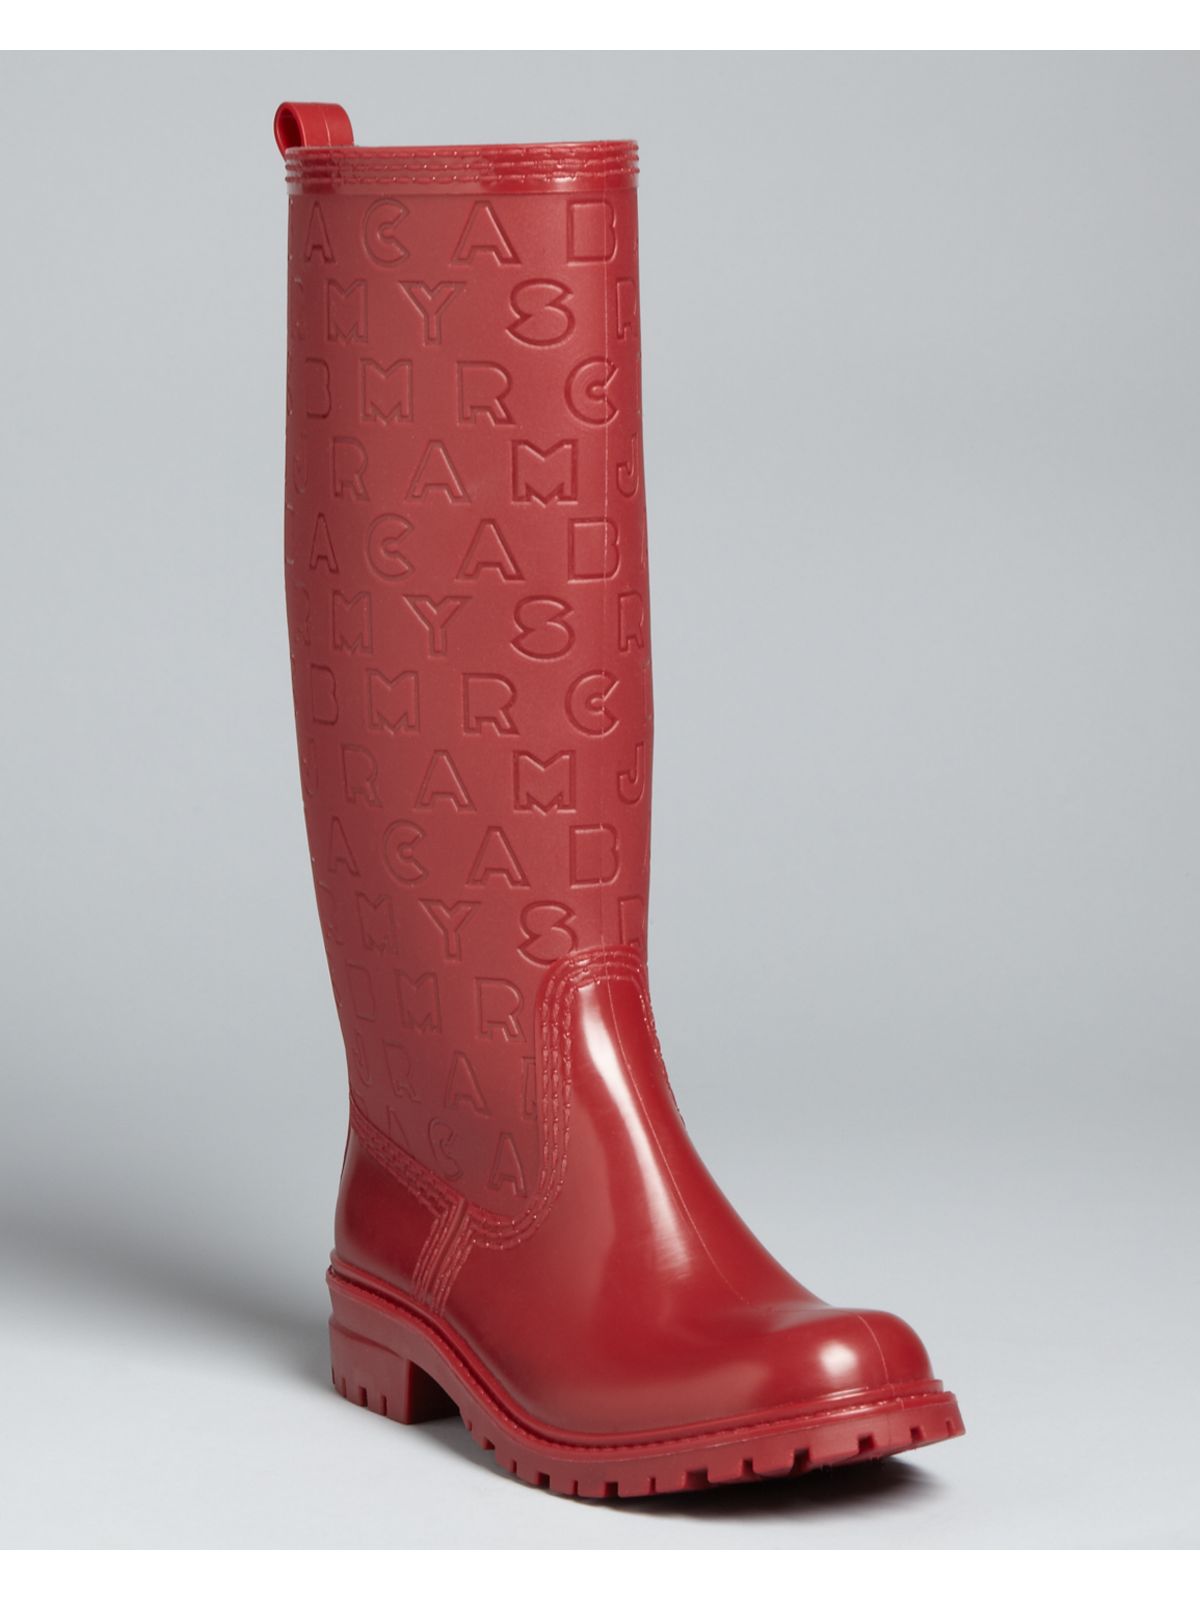 Louis Vuitton Womens Rain Boots